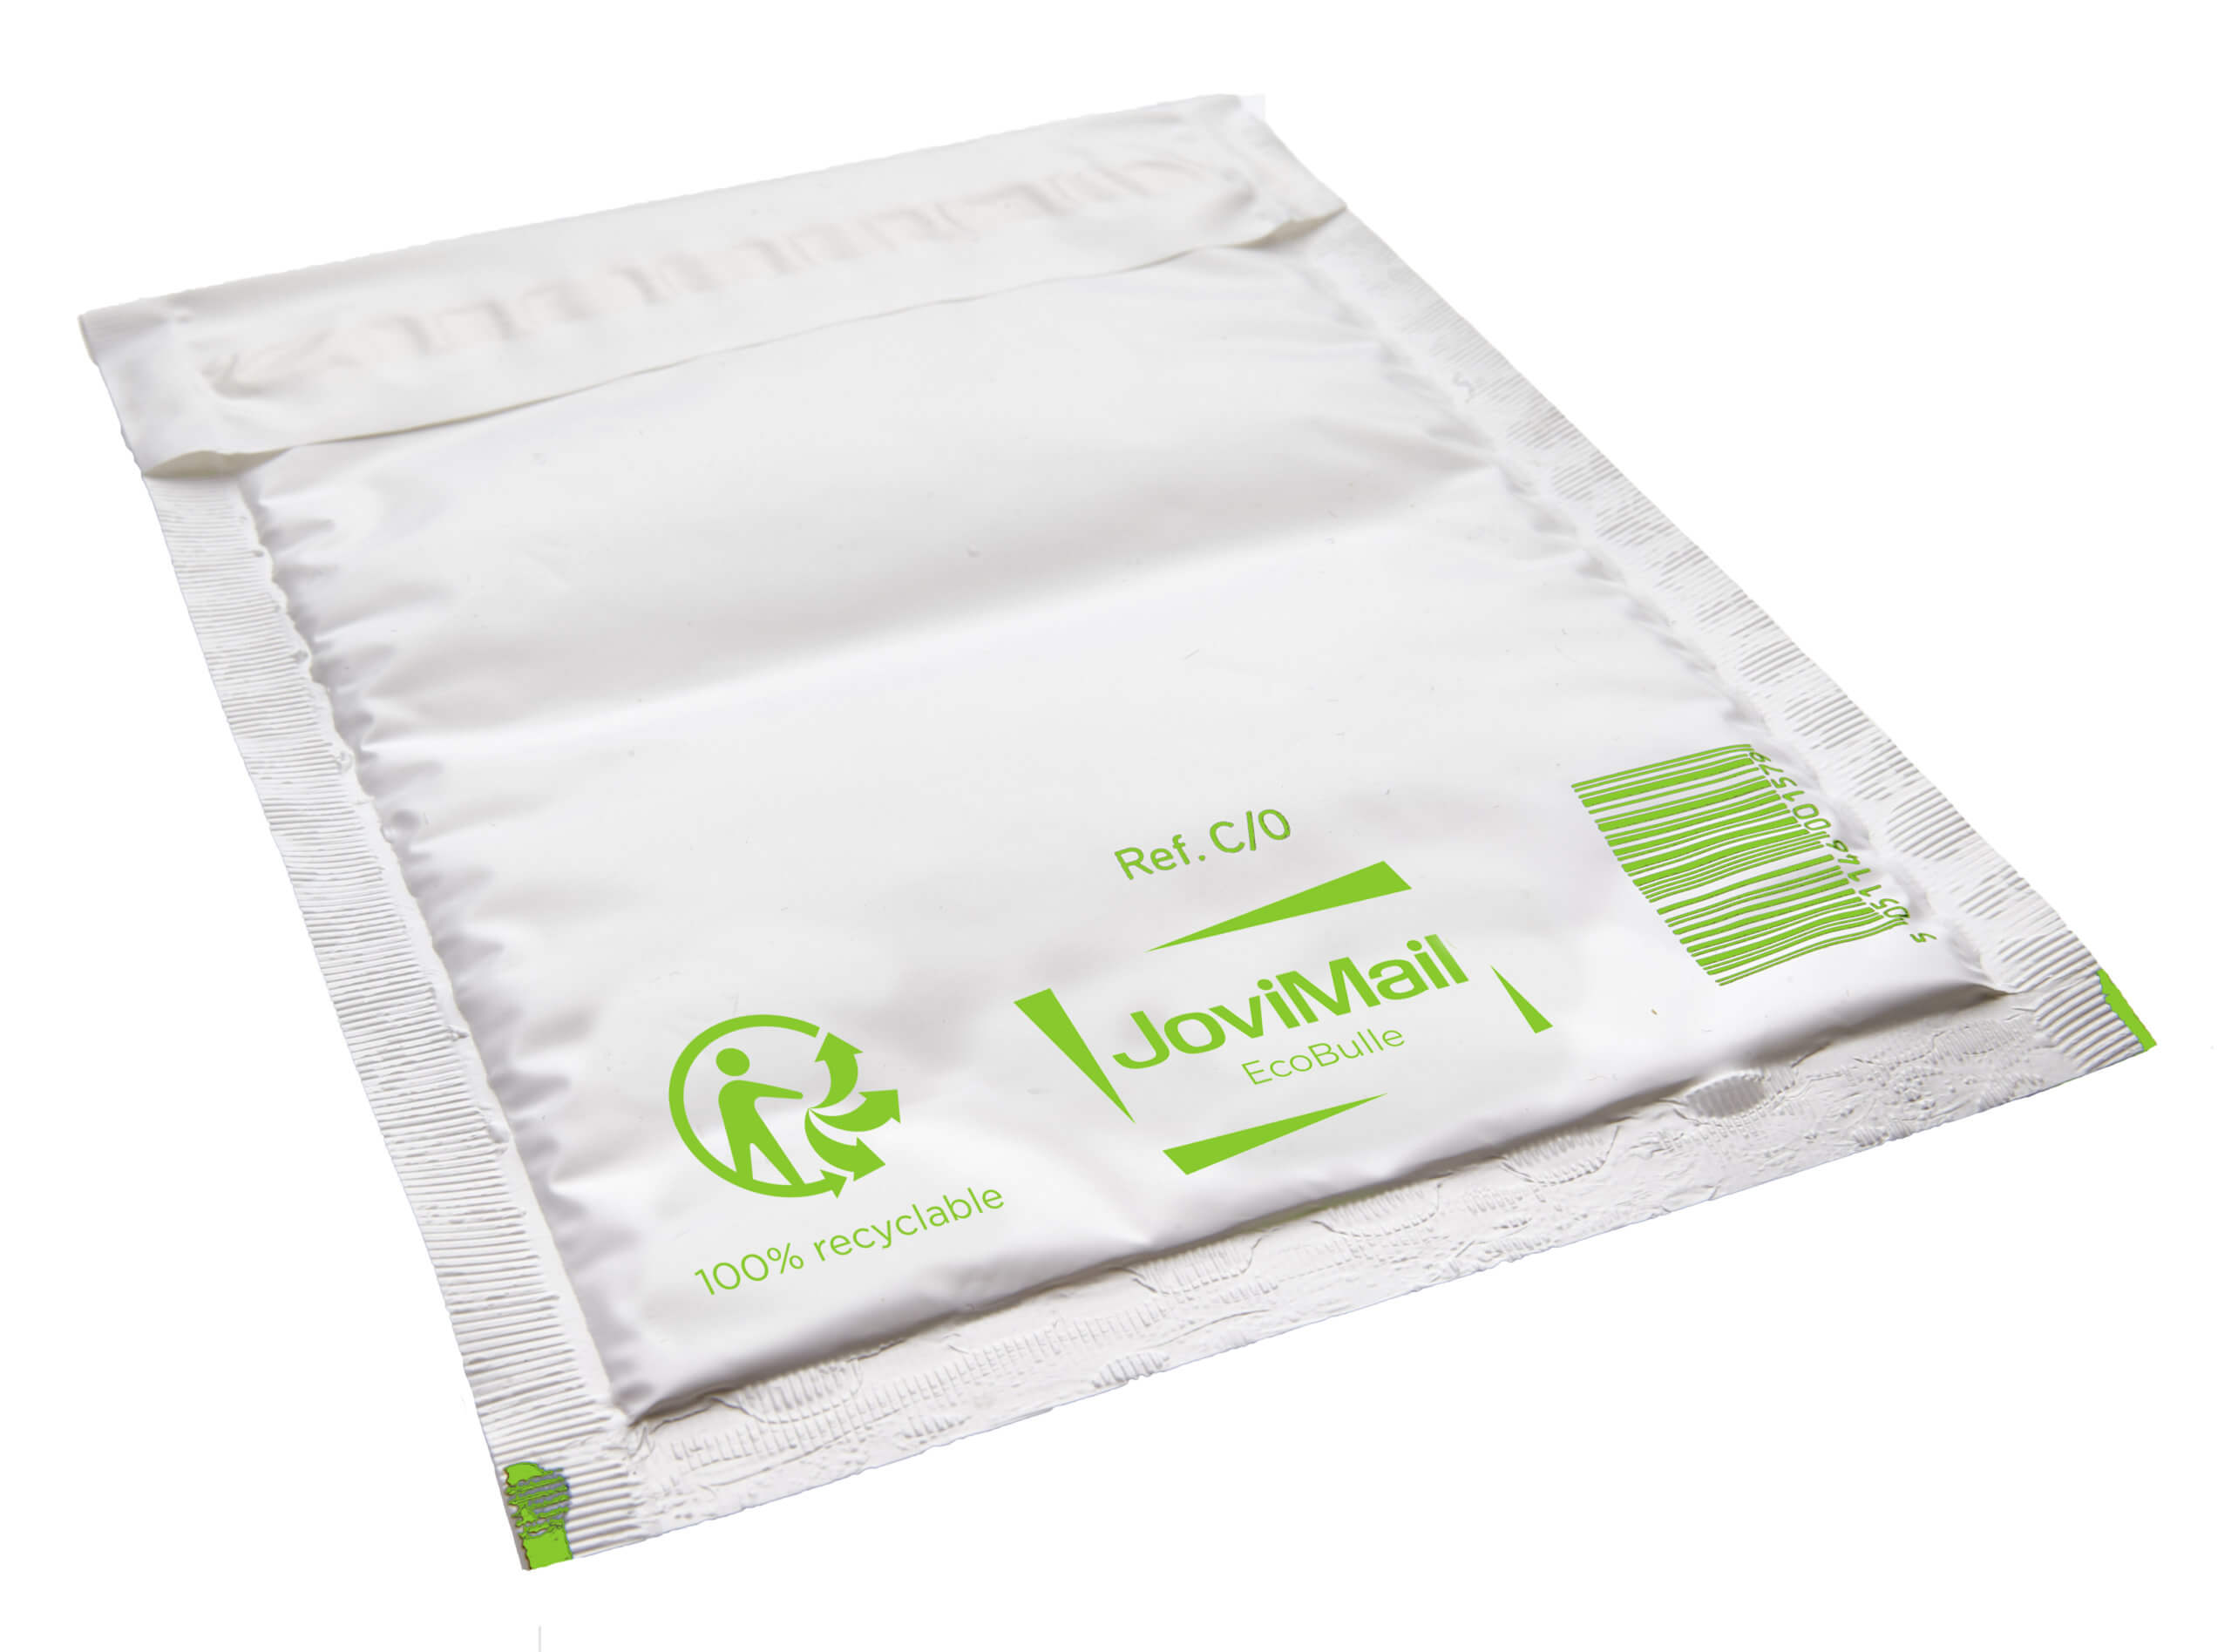 Enveloppe bulle plastique Mail Lite Tuff JoviMail® Ecobulle taille